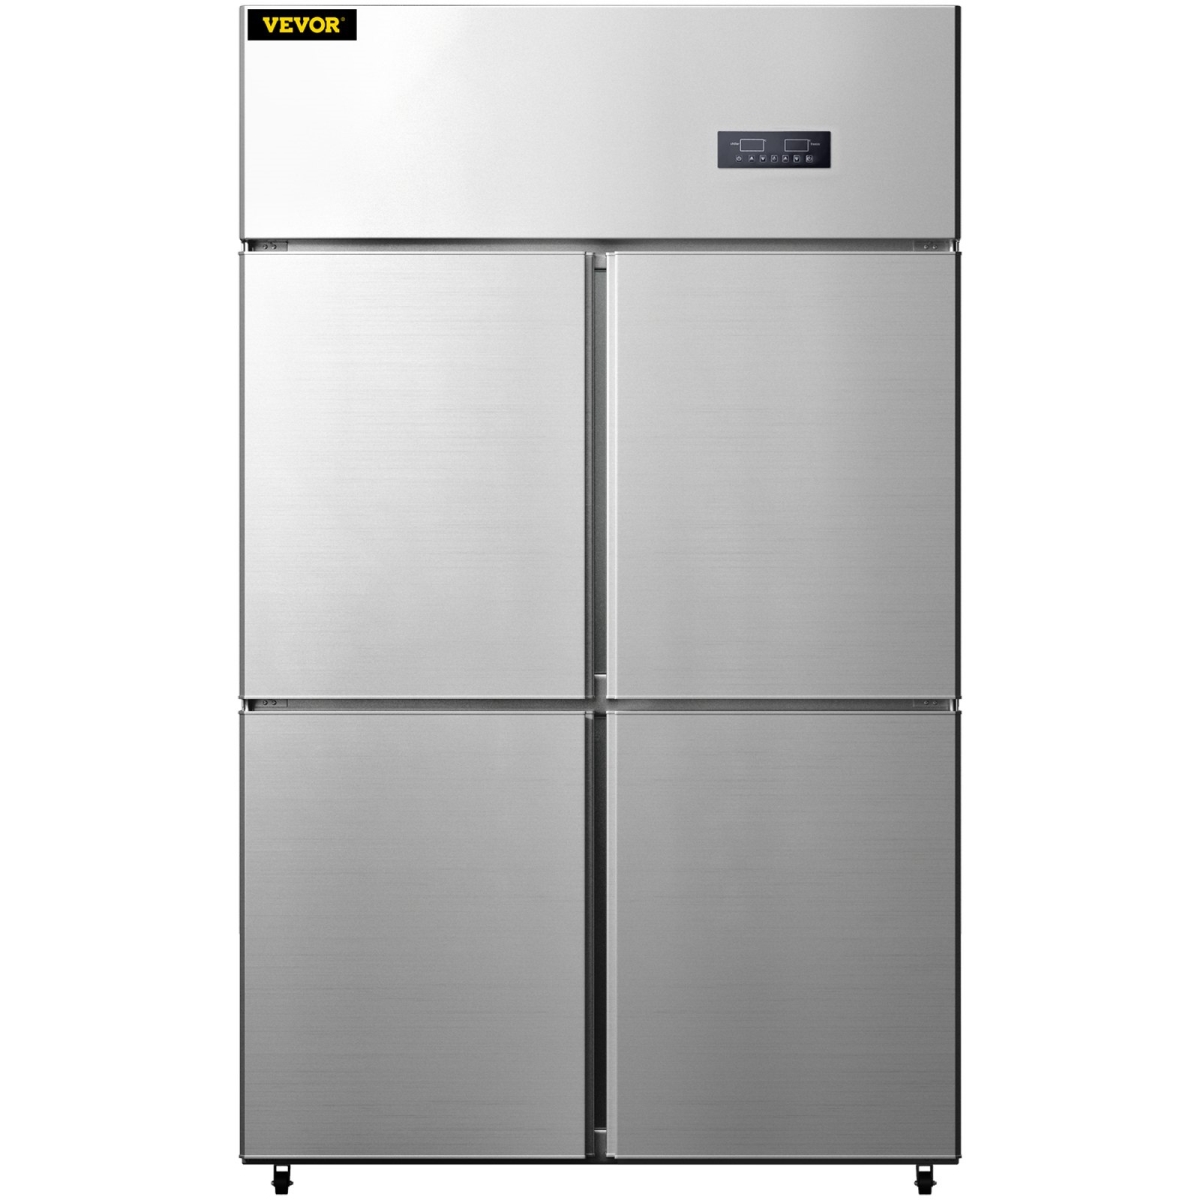 Picture of Vevor SMFPMLS47110VGR1QV1 27.5 cu. ft. Outdoor Refrigerator 48 in. Side by Side Freezer in Stainless Steel 4-Door Merchandiser Refrigerator